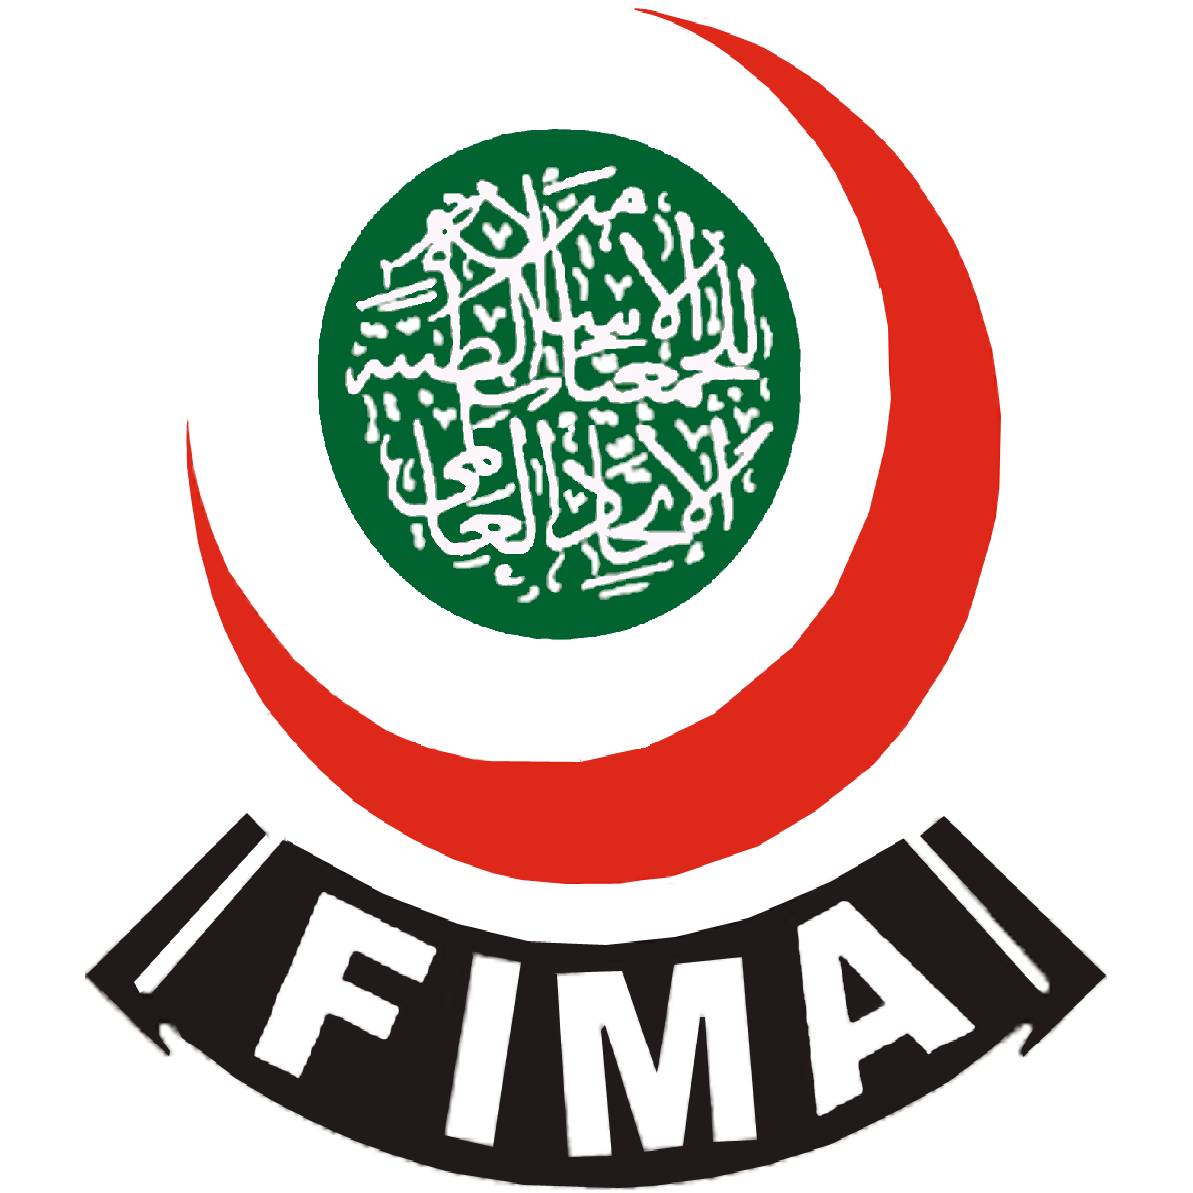 Muslim Education Charity Organization in USA - Federation of Islamic Medical Associations